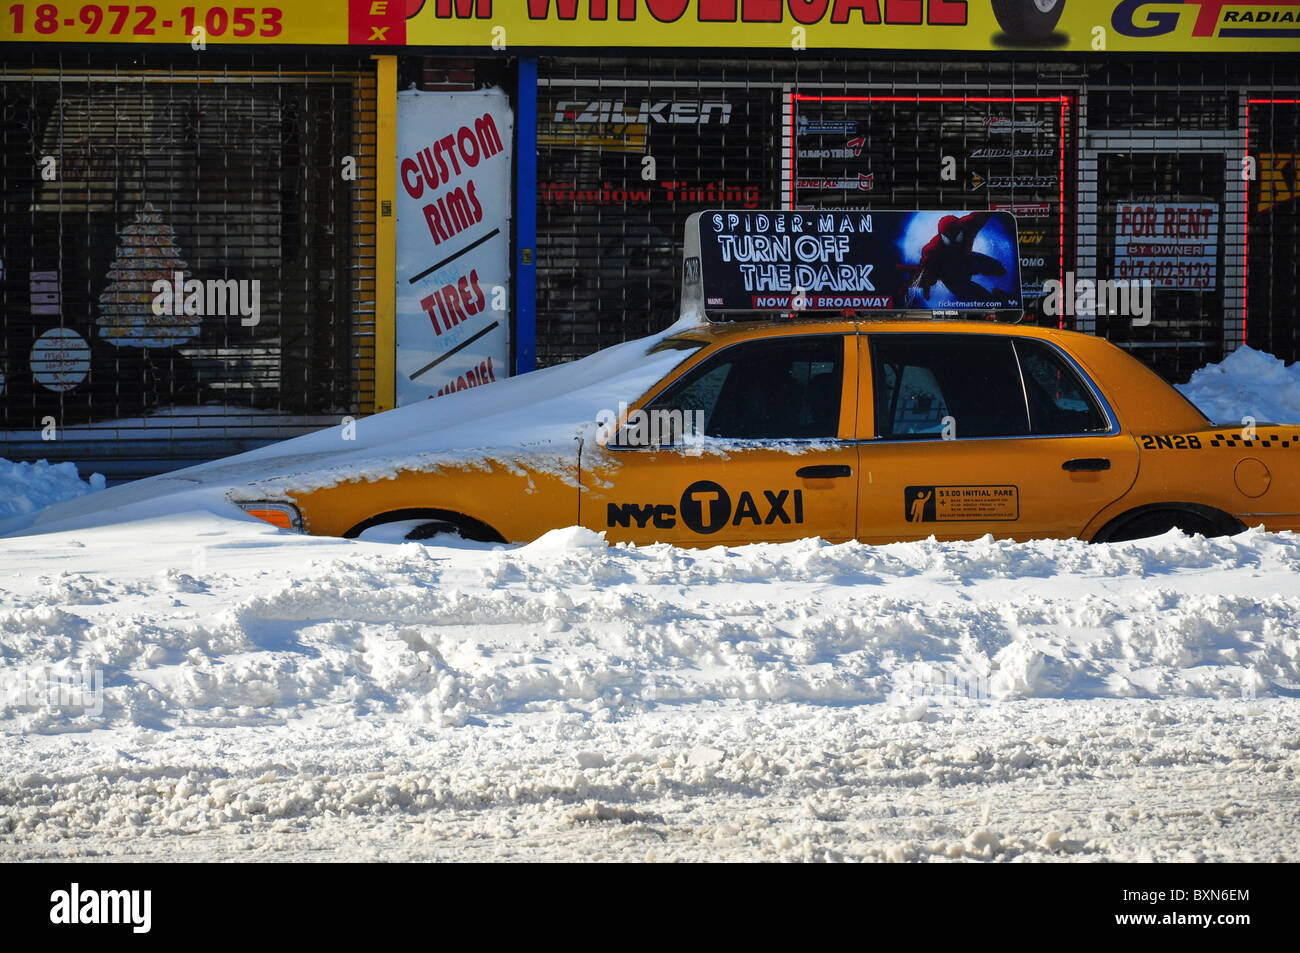 New York yellow Cab im Schnee begraben Stockfoto